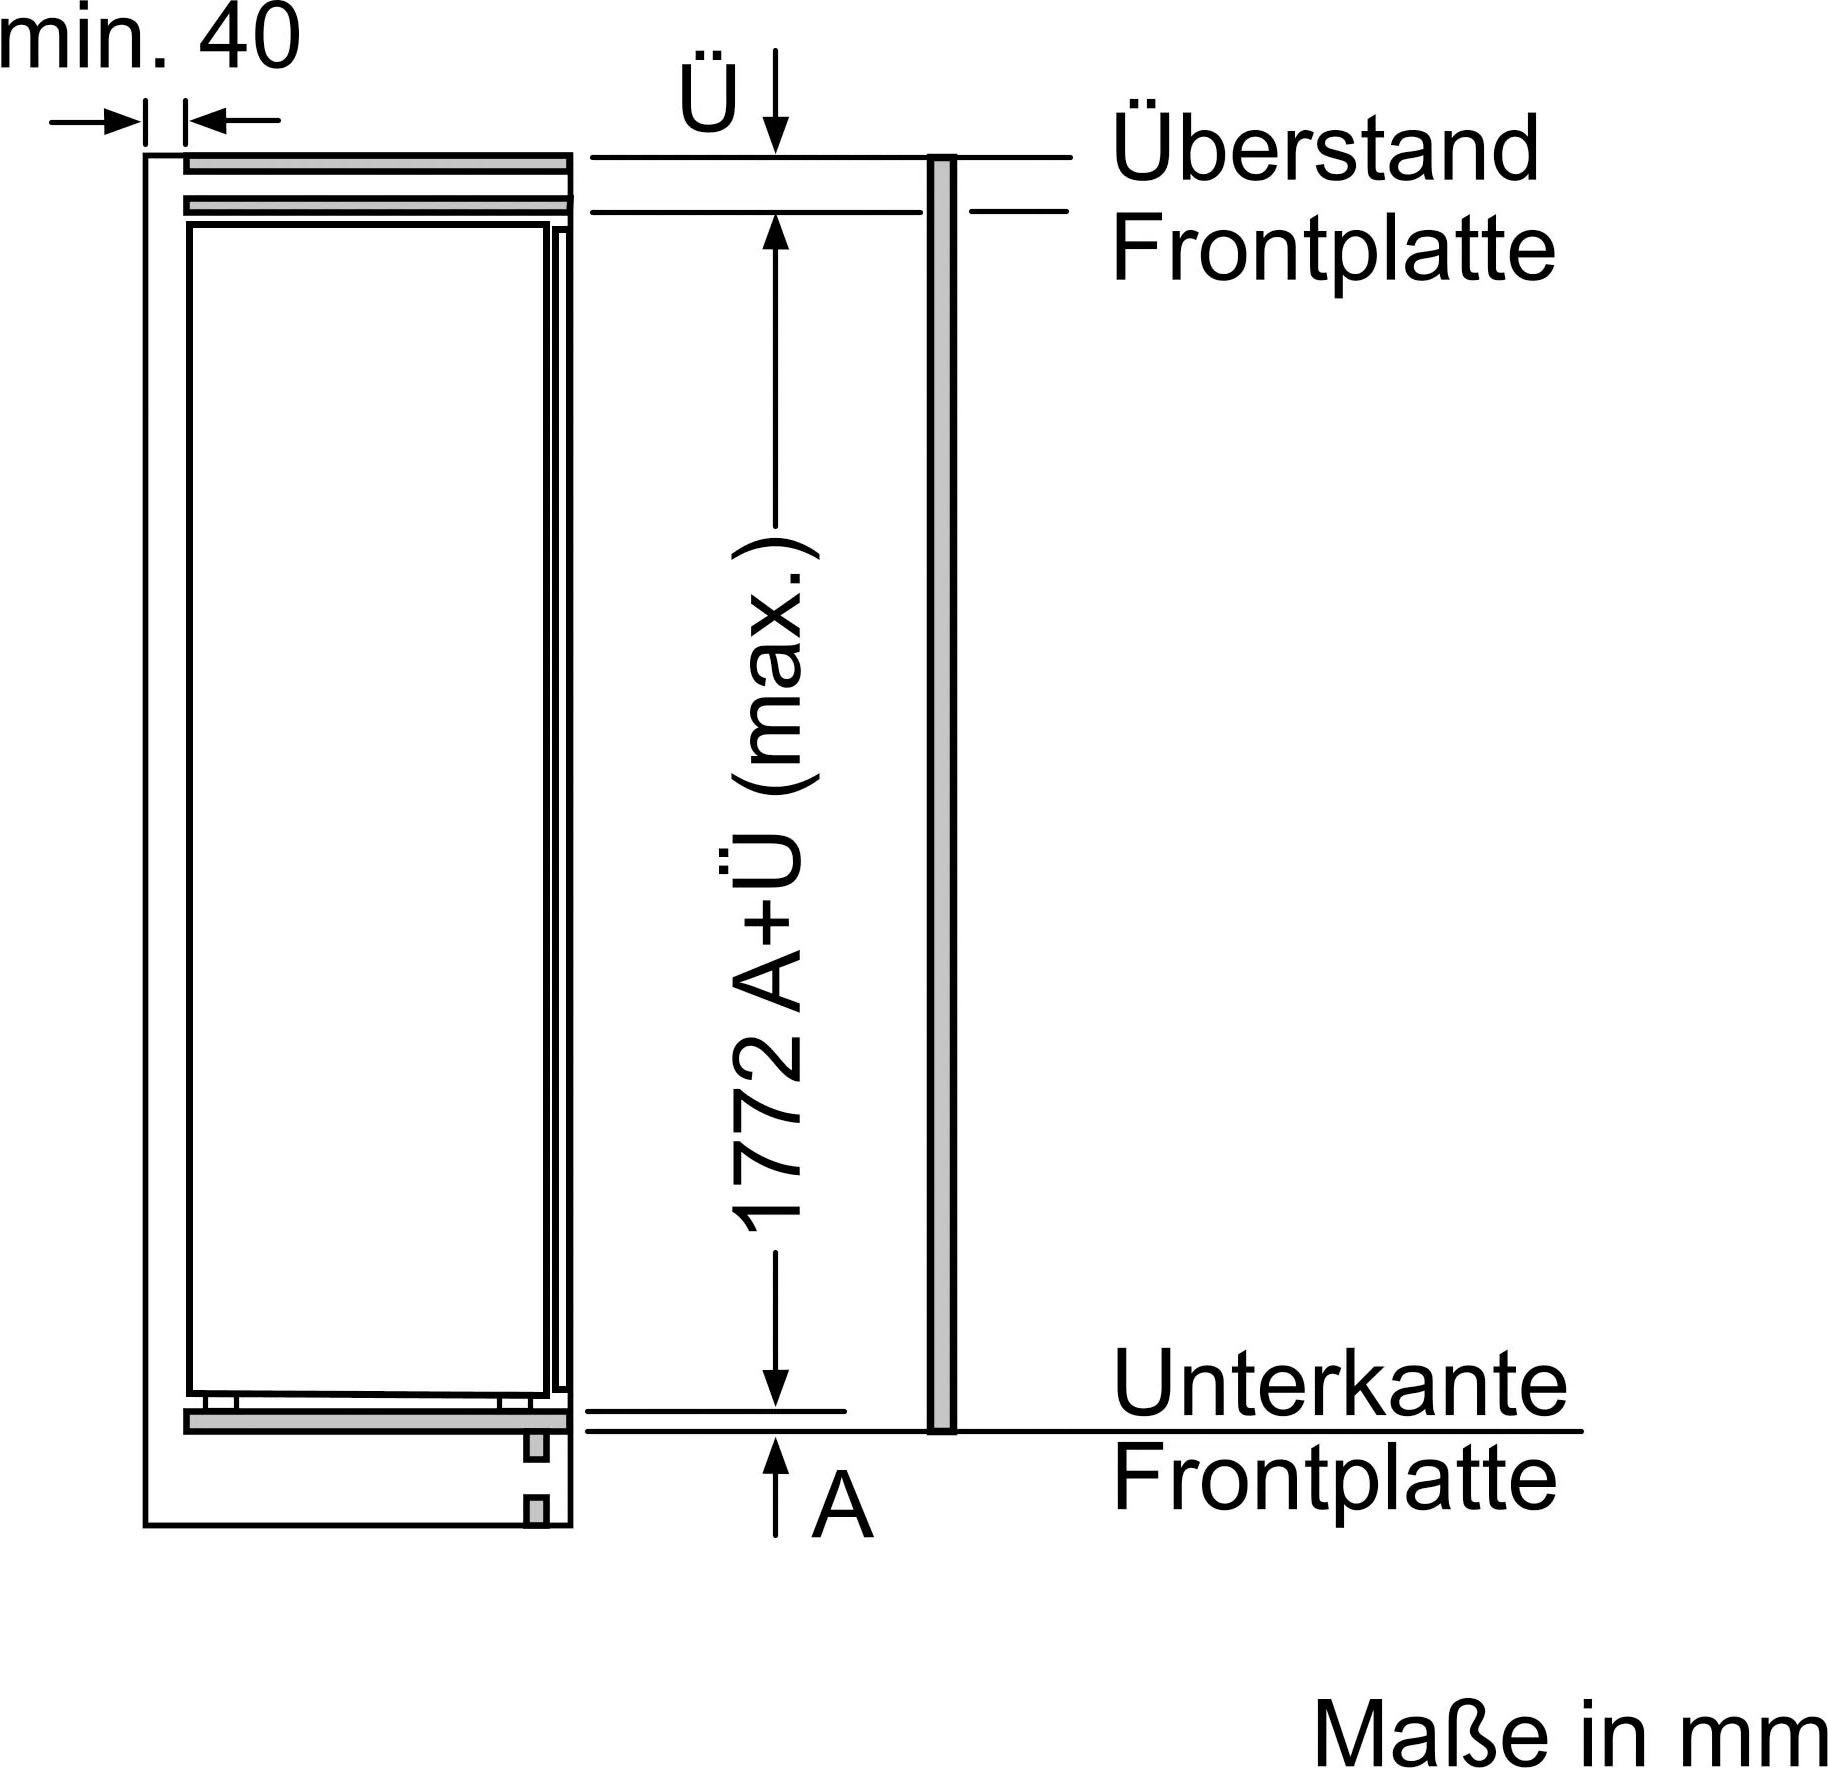 NEFF Einbaukühlschrank KI1813FE0, 56 cm breit N hoch, cm 70 177,2